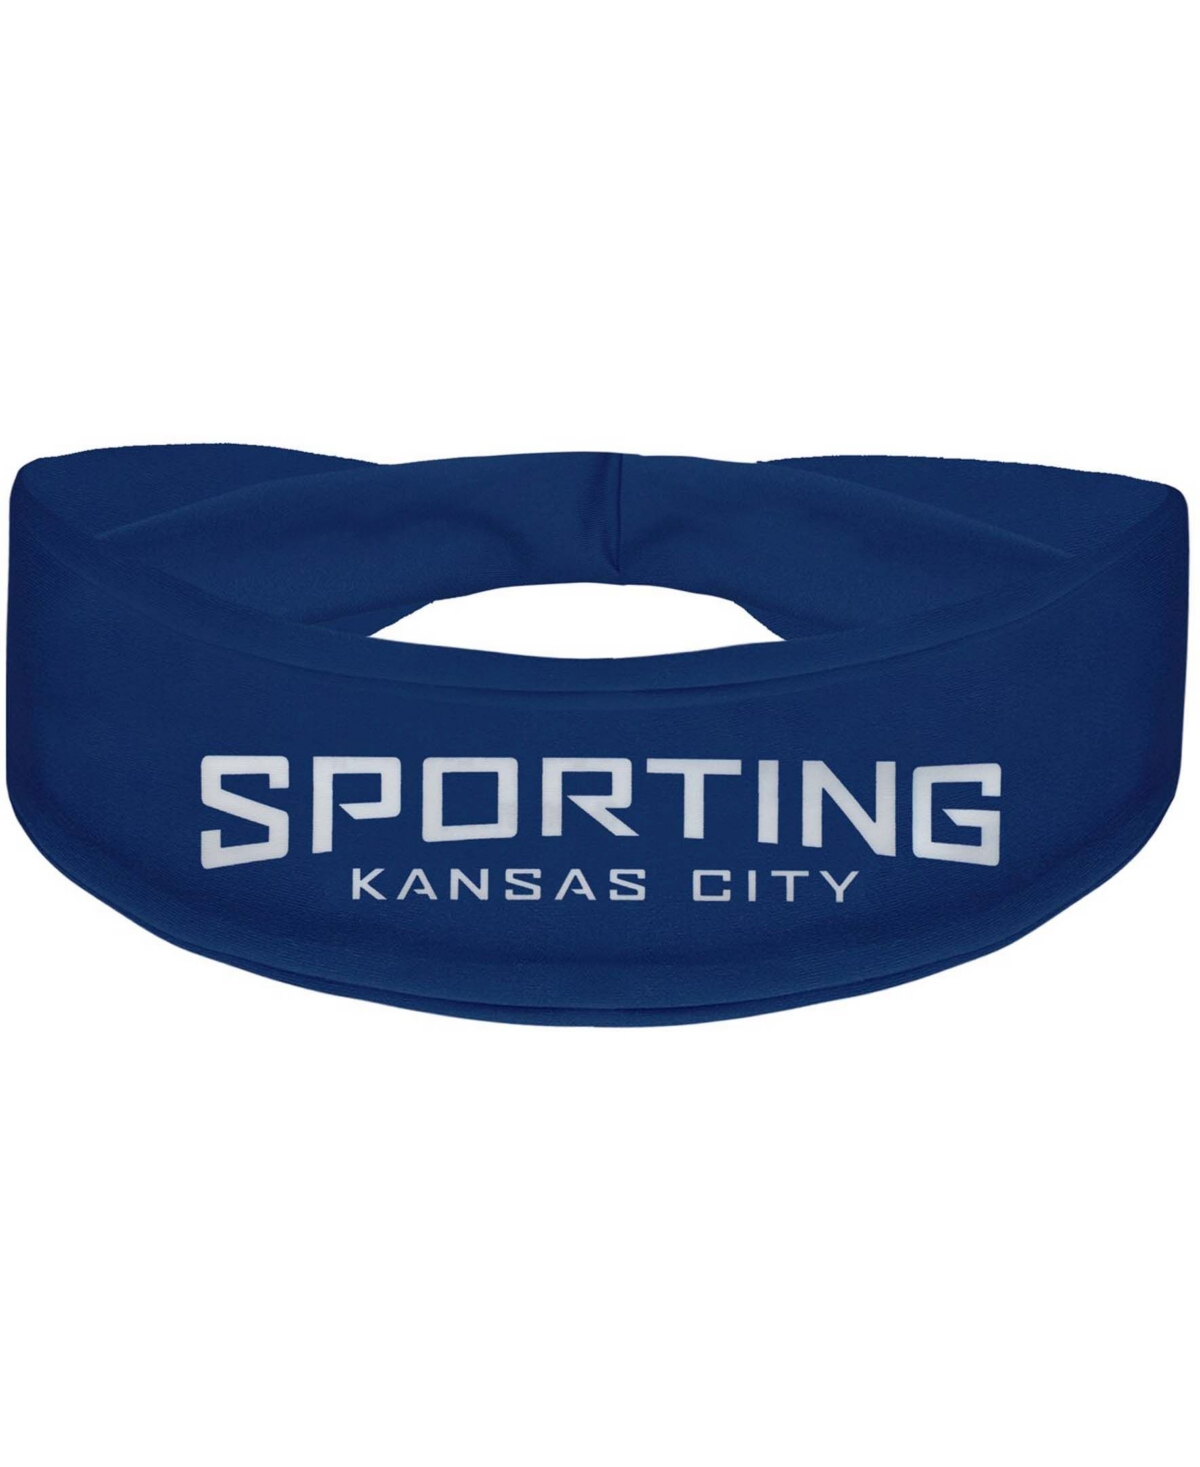 Navy Sporting Kansas City Alternate Logo Cooling Headband - Navy